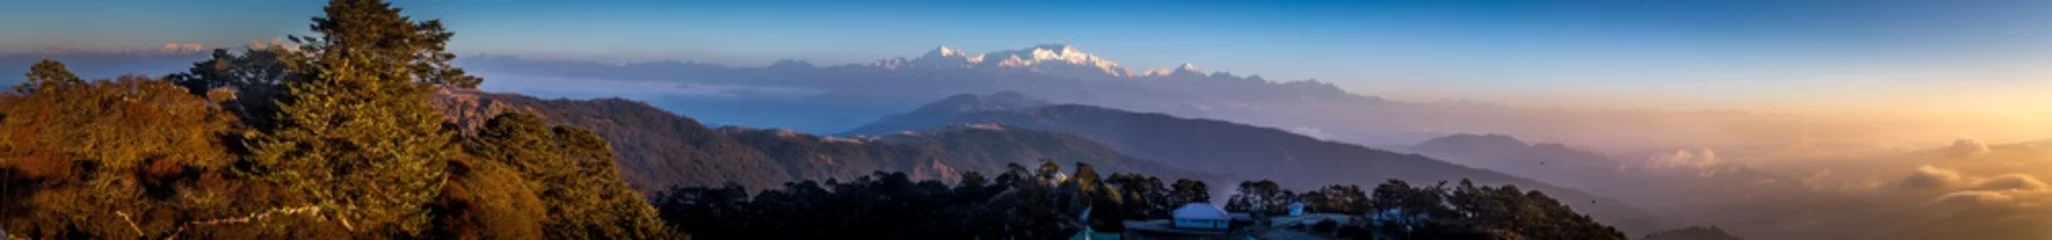 Sheer curtains Makalu Kanchenjunga and Everest in a single frame, Sandakphu,West Bengal, india